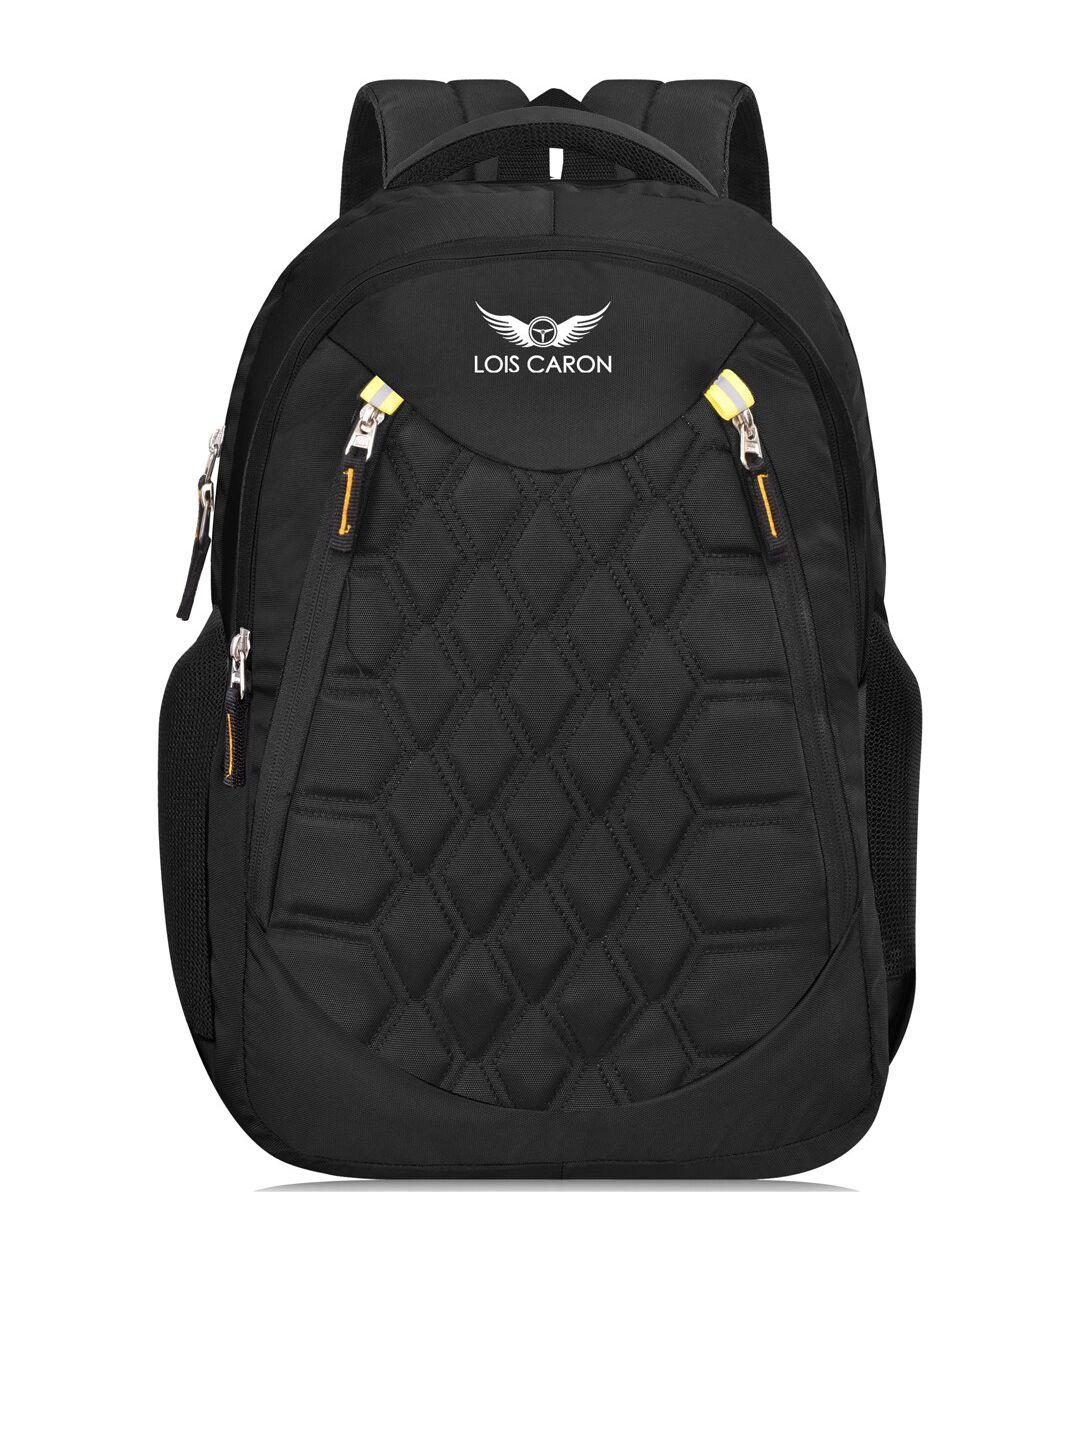 lois caron unisex black textured backpack